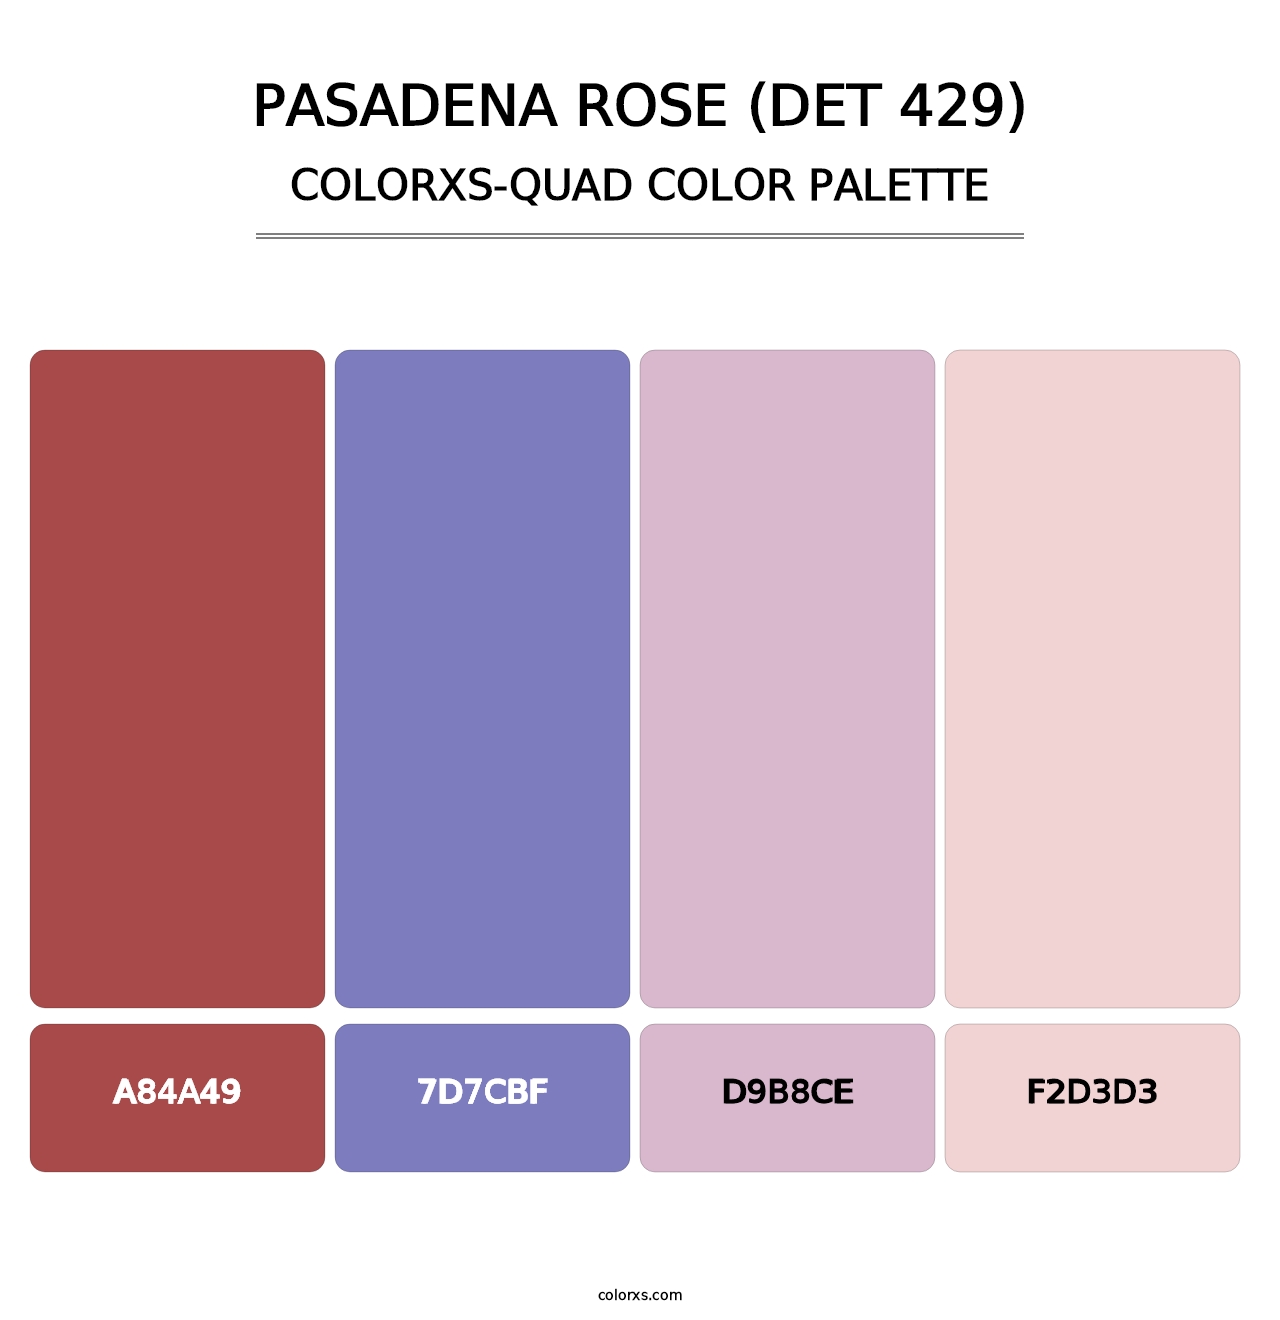 Pasadena Rose (DET 429) - Colorxs Quad Palette